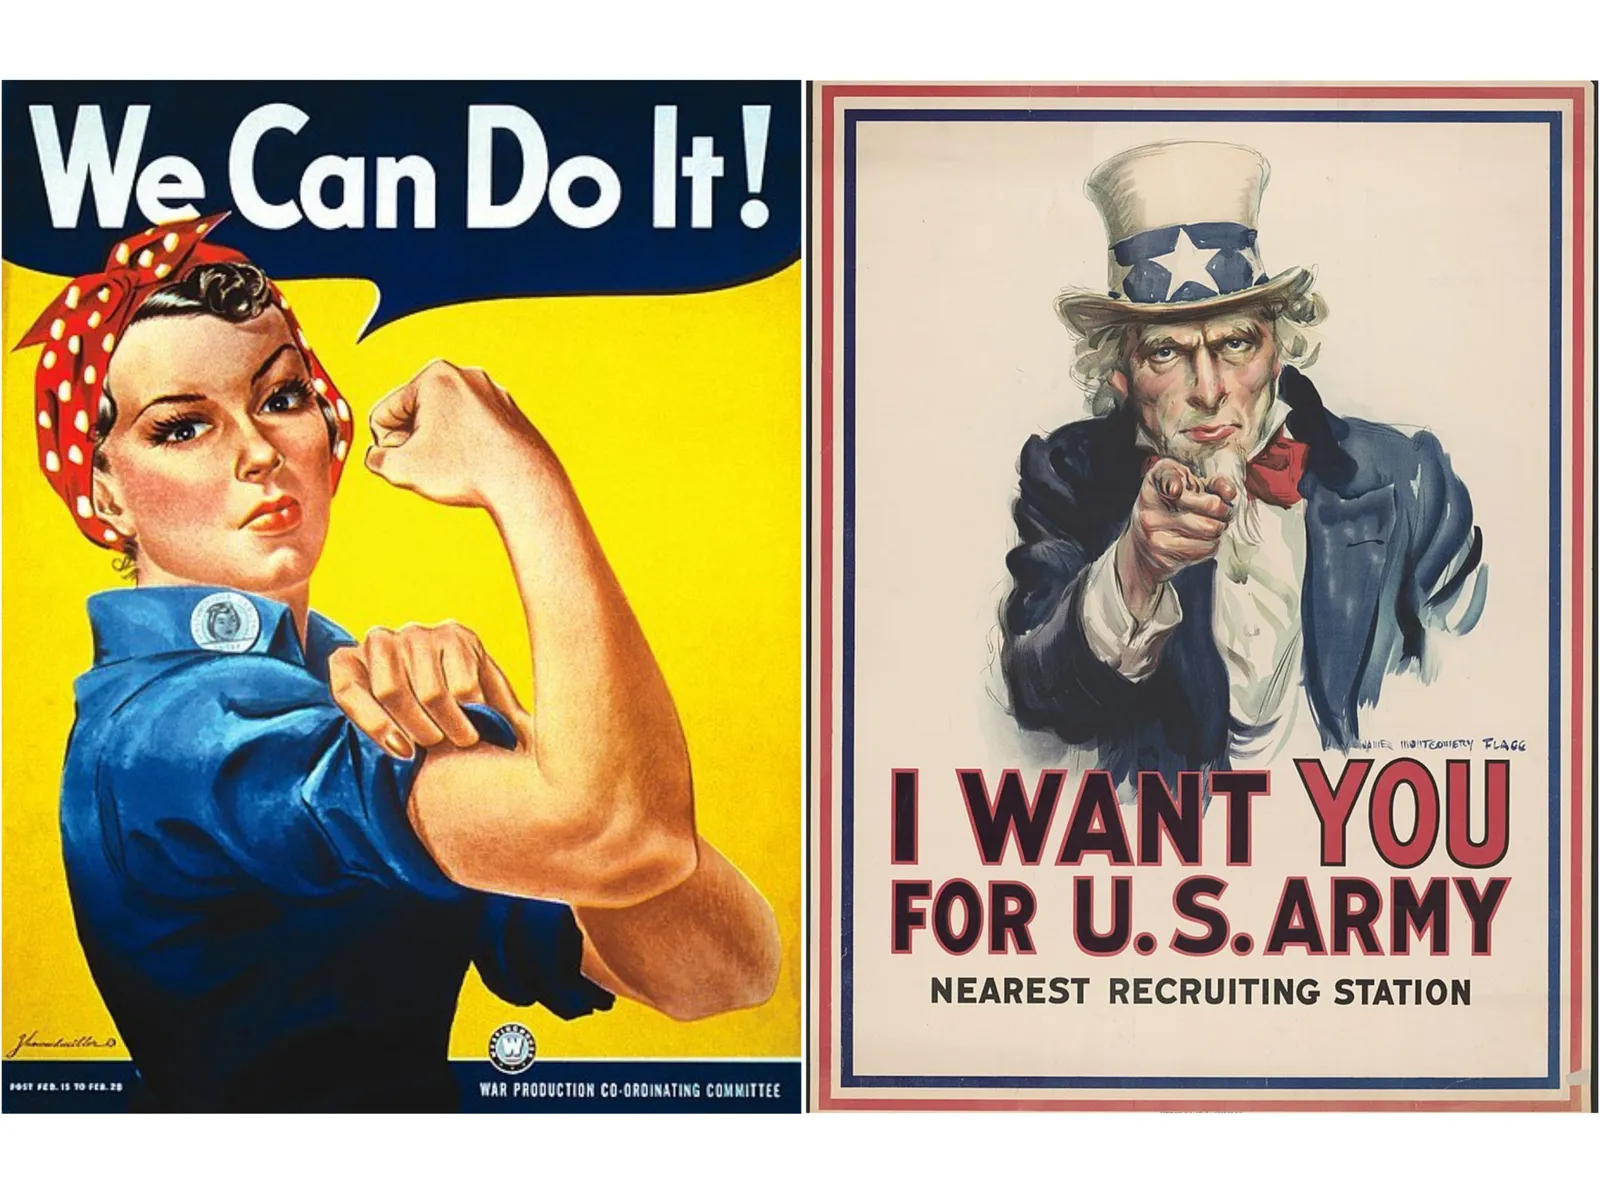 Some posters. Дядя Сэм плакат. I want you for us Army плакат. Us Army want you плакаты. Плакат «we can do it! ».